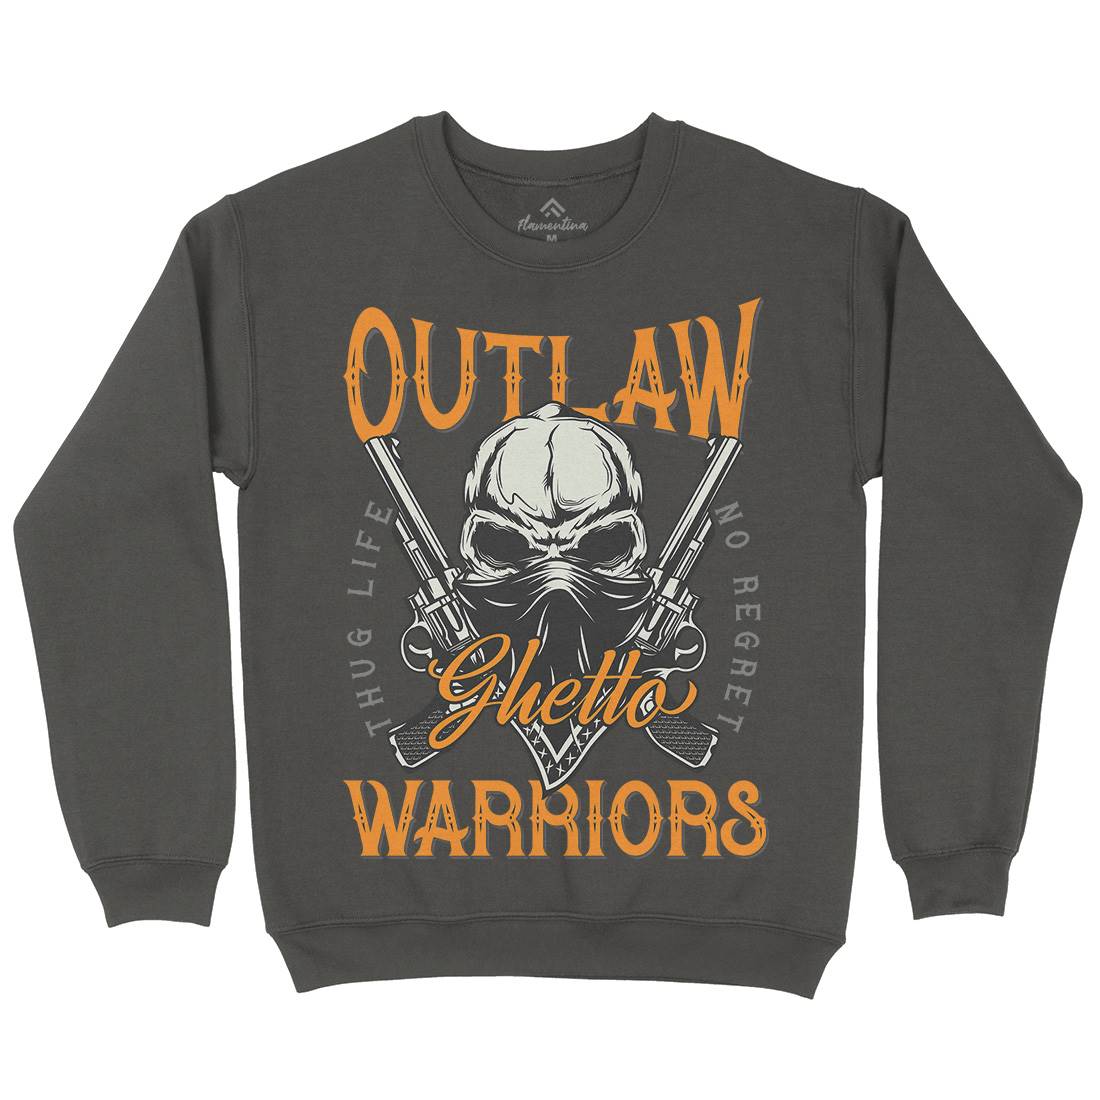 Outlaw Warriors Mens Crew Neck Sweatshirt Retro D959